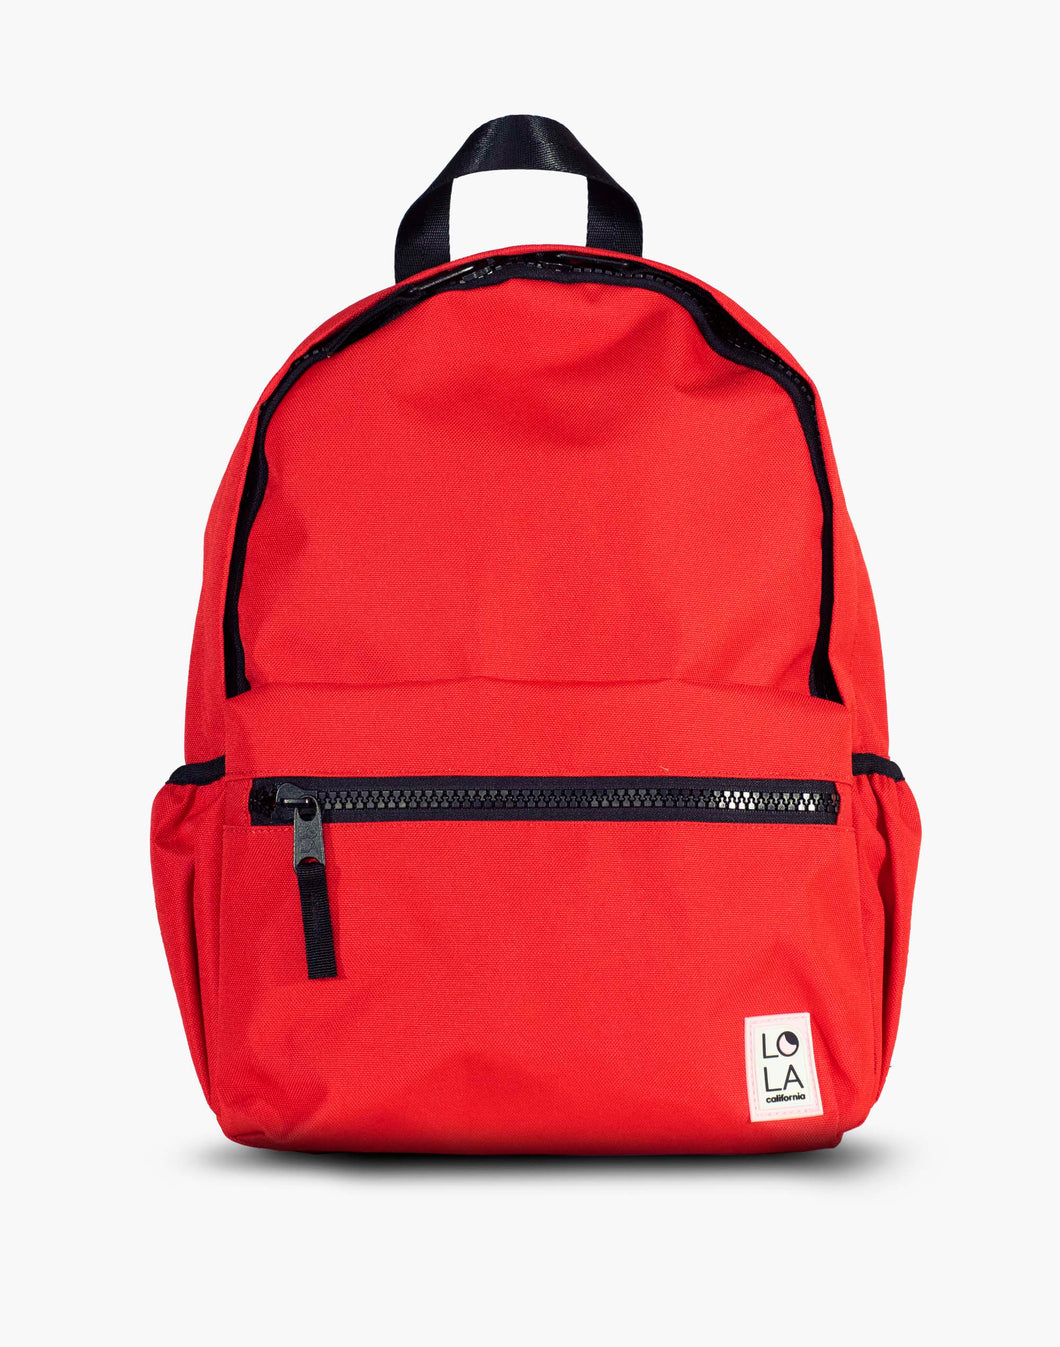 Sprite Recycled Starchild Medium Backpack  - Scarlet